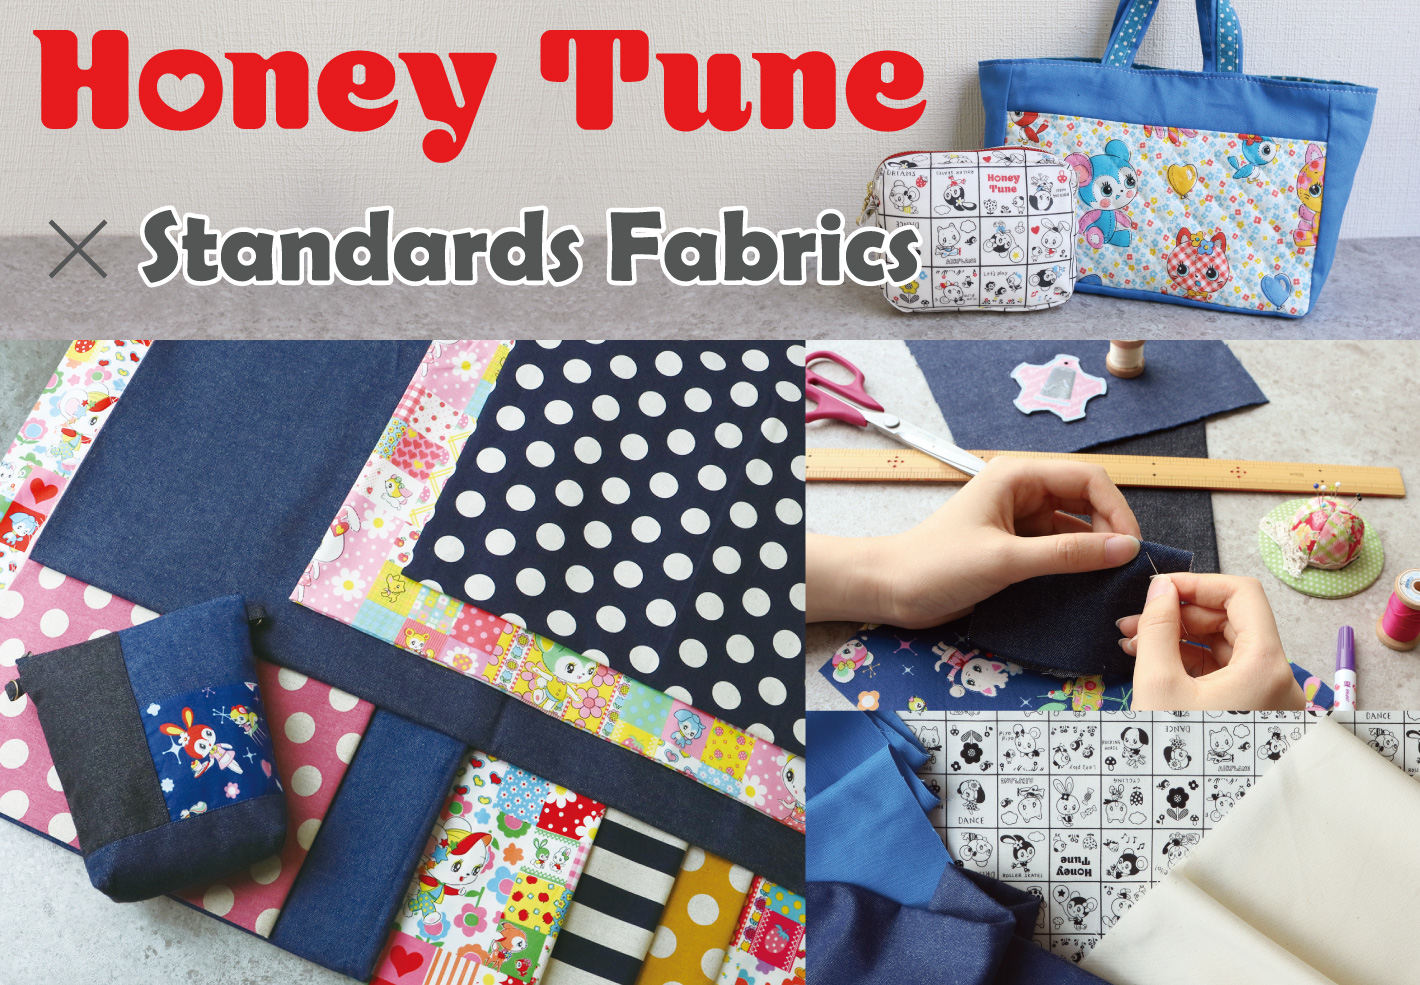 Honey tunes & standard fabrics